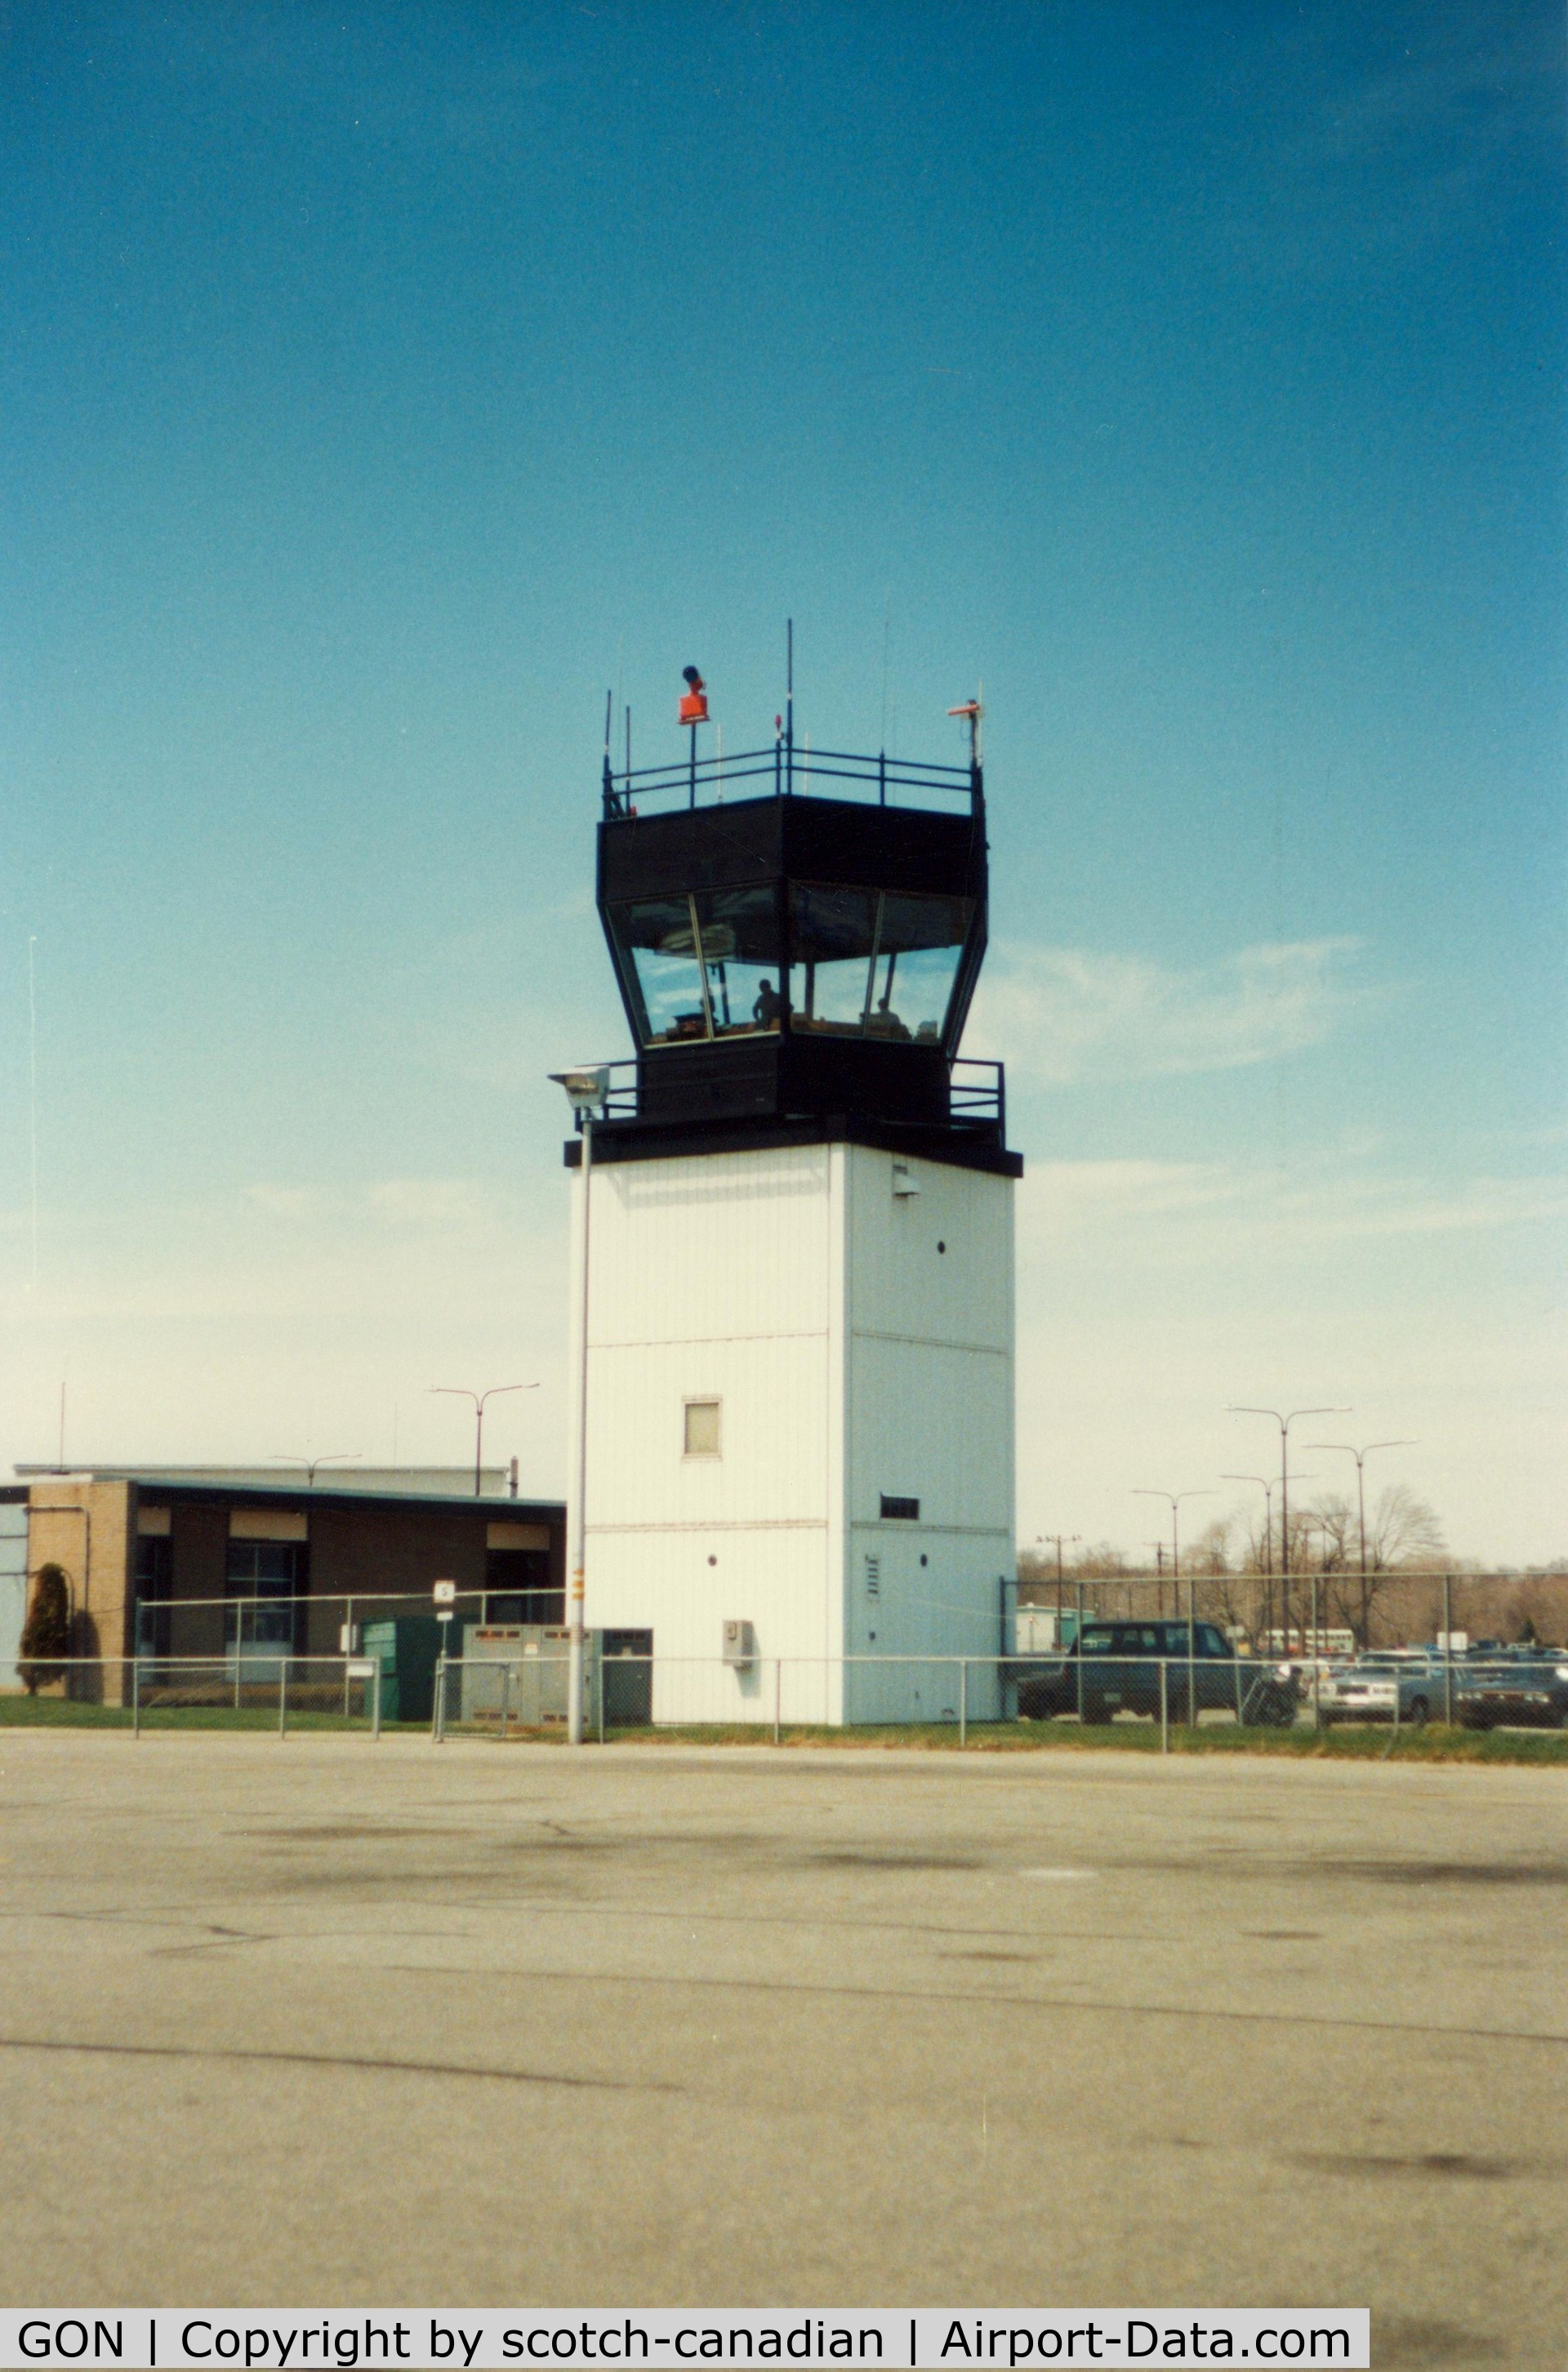 Groton-new London Airport (GON) - Airport Control Tower at at Groton-New London Airport, New London, CT - circa 1980's